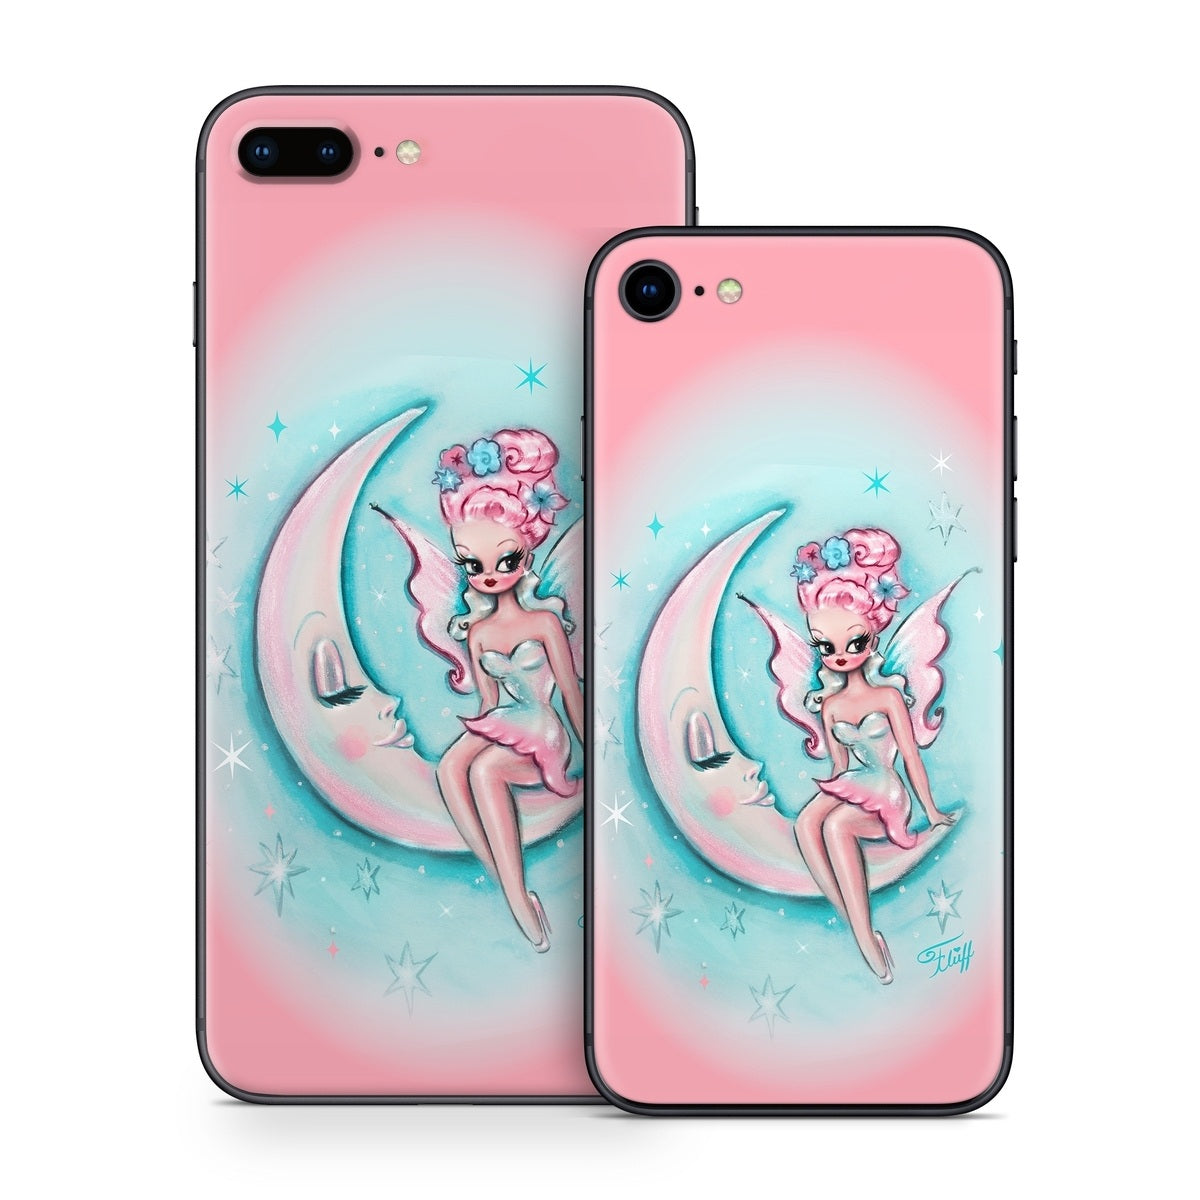 Moon Pixie - Apple iPhone 8 Skin